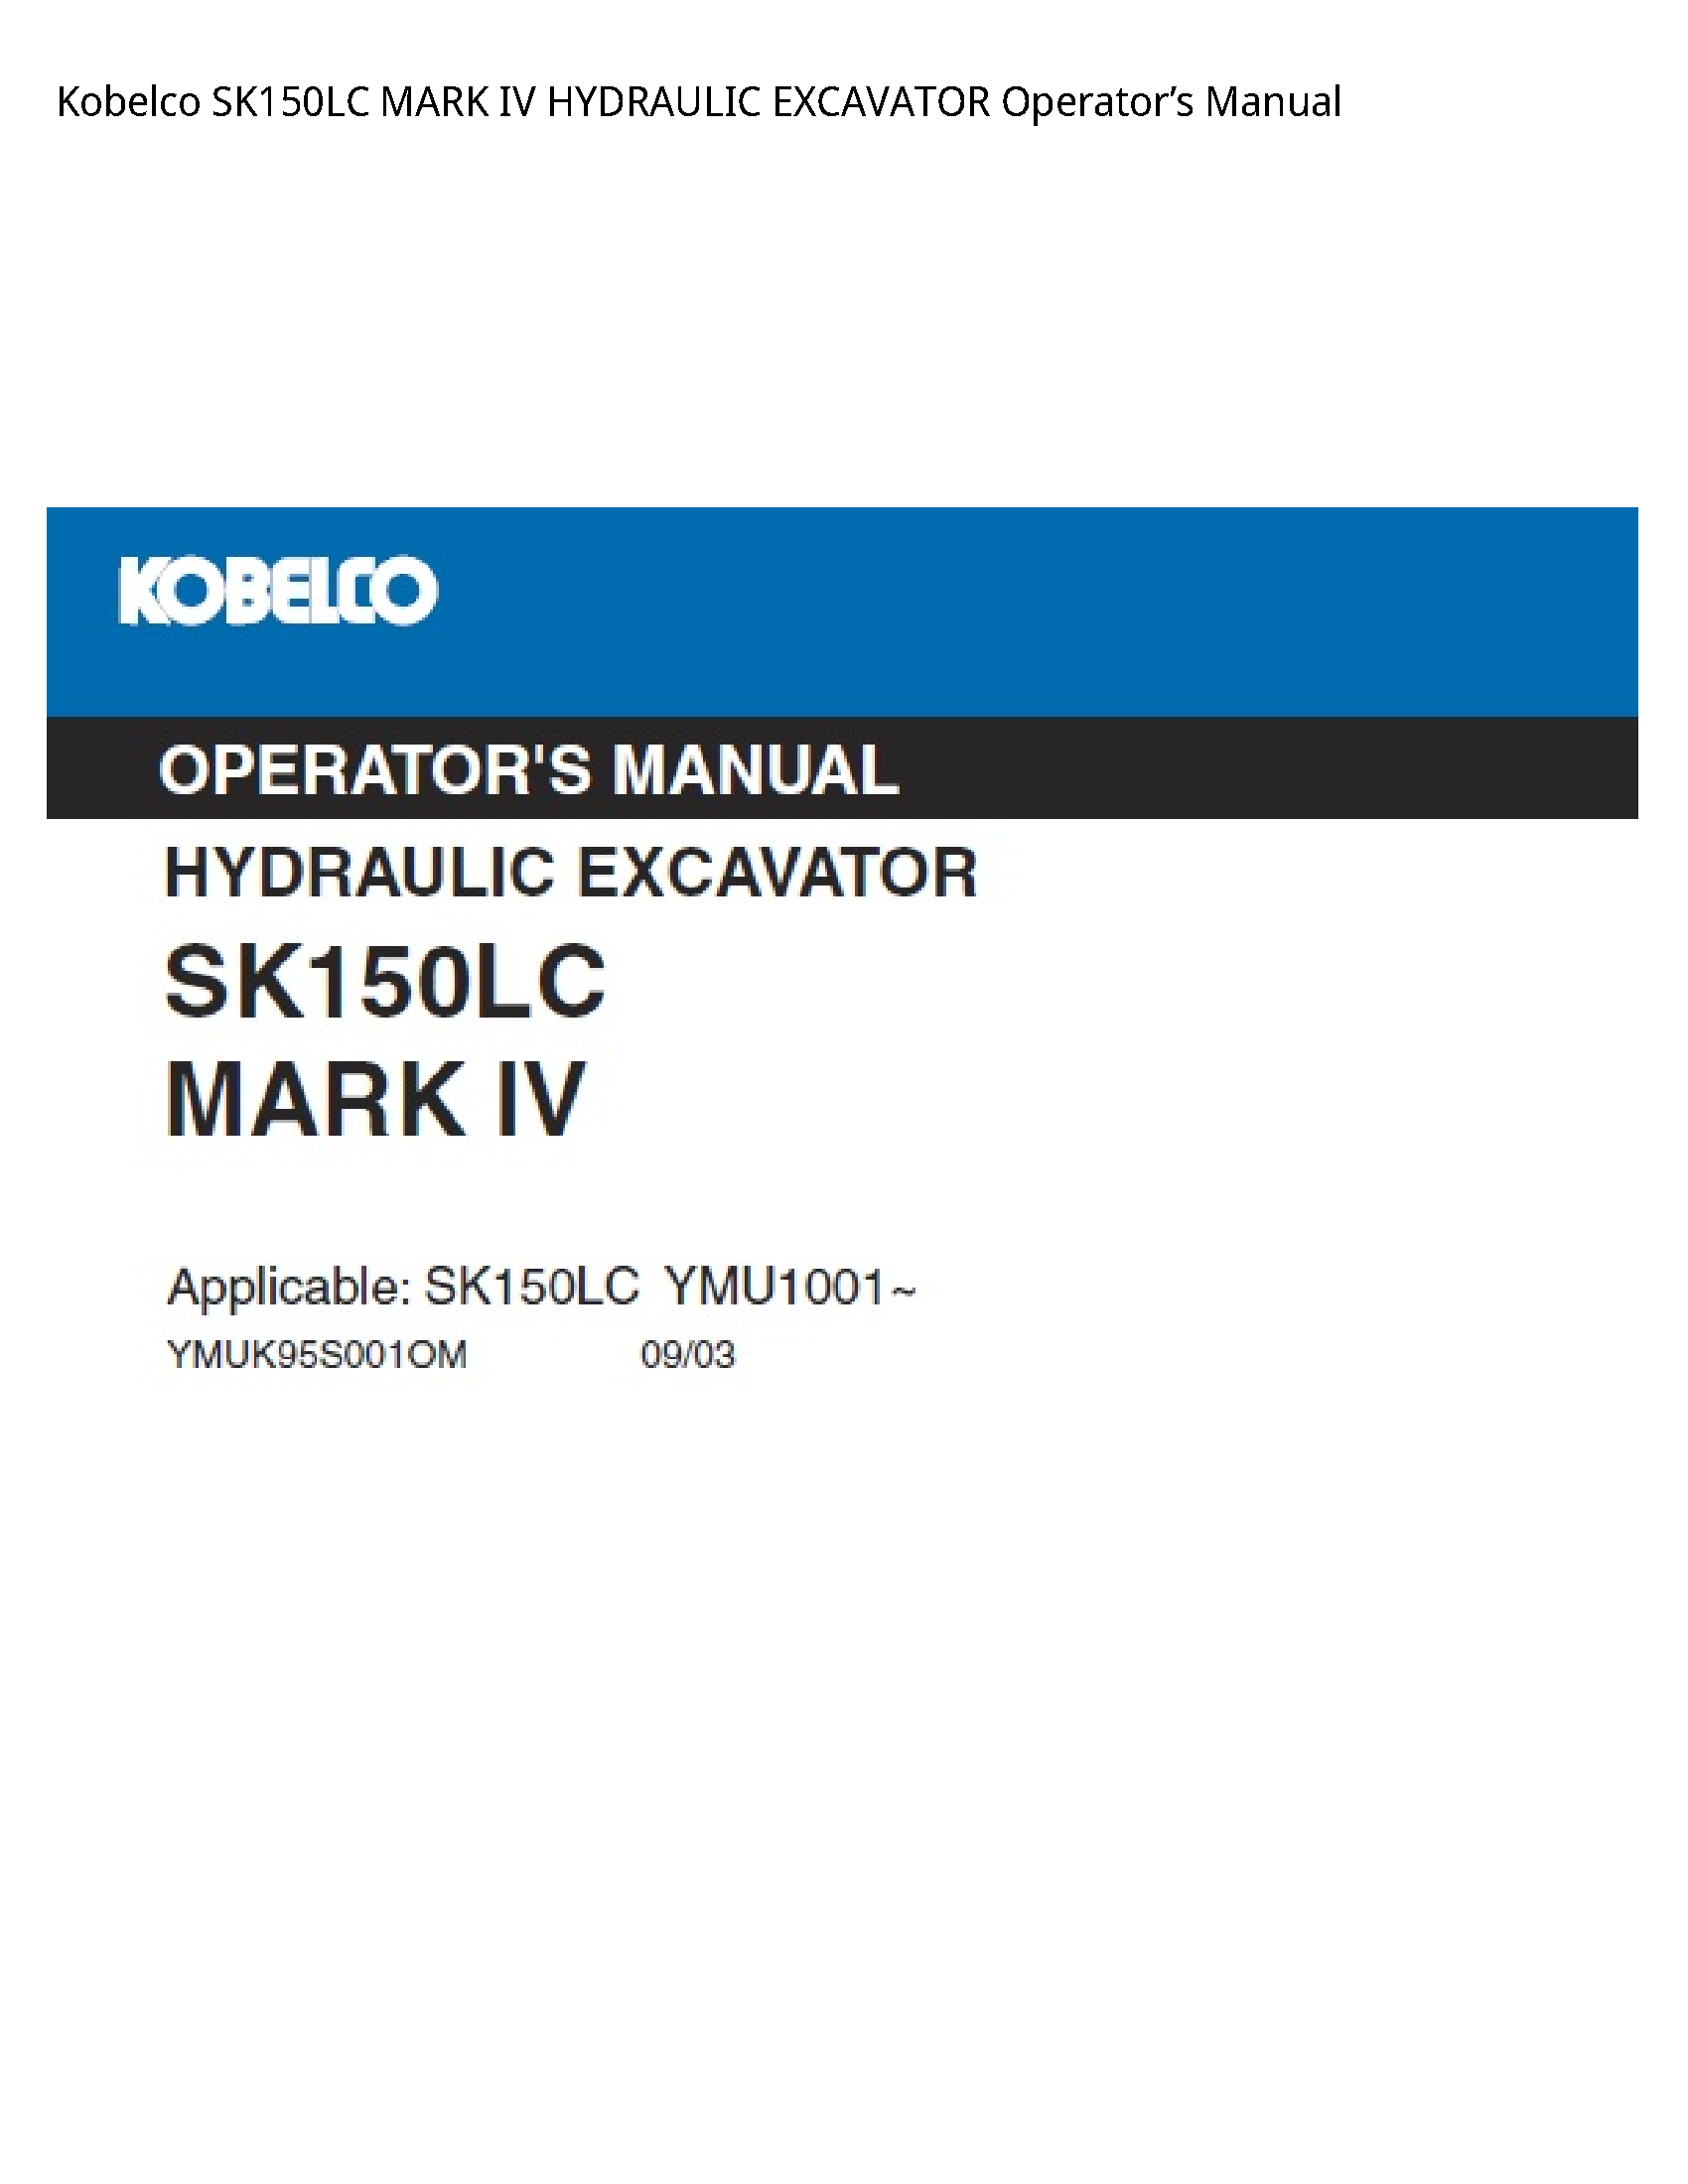 Kobelco SK150LC MARK IV HYDRAULIC EXCAVATOR Operator’s manual